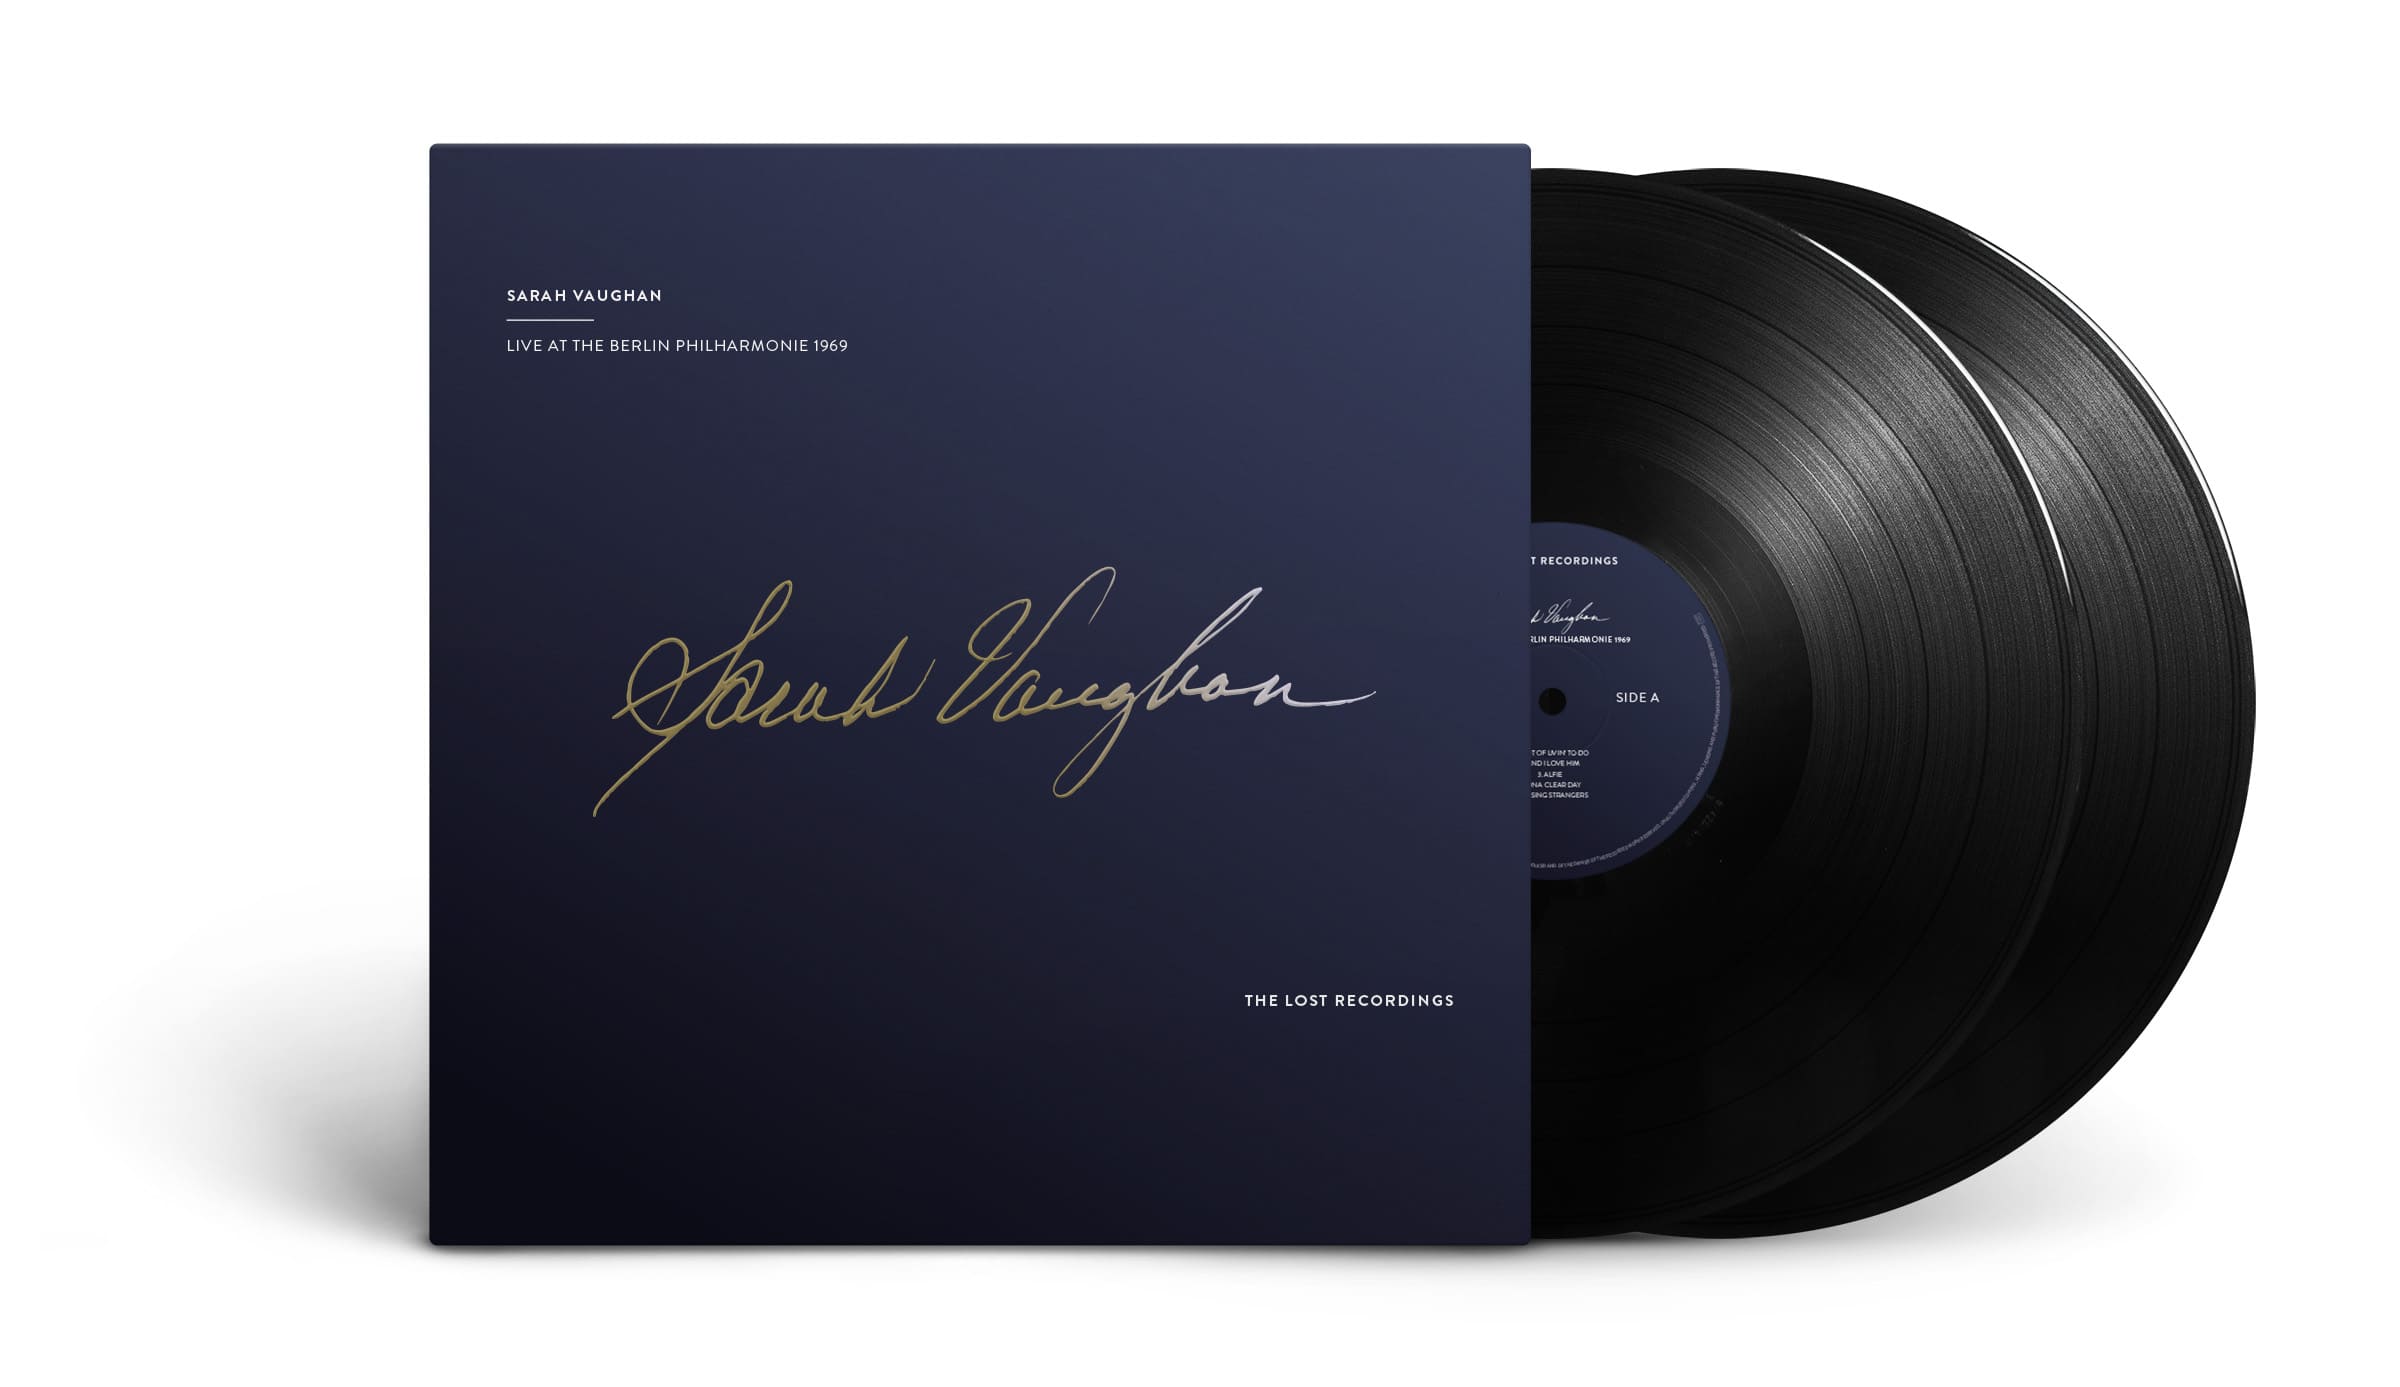 Sarah Vaughan Live at the Berlin Philharmonie 1969 - Vinyle